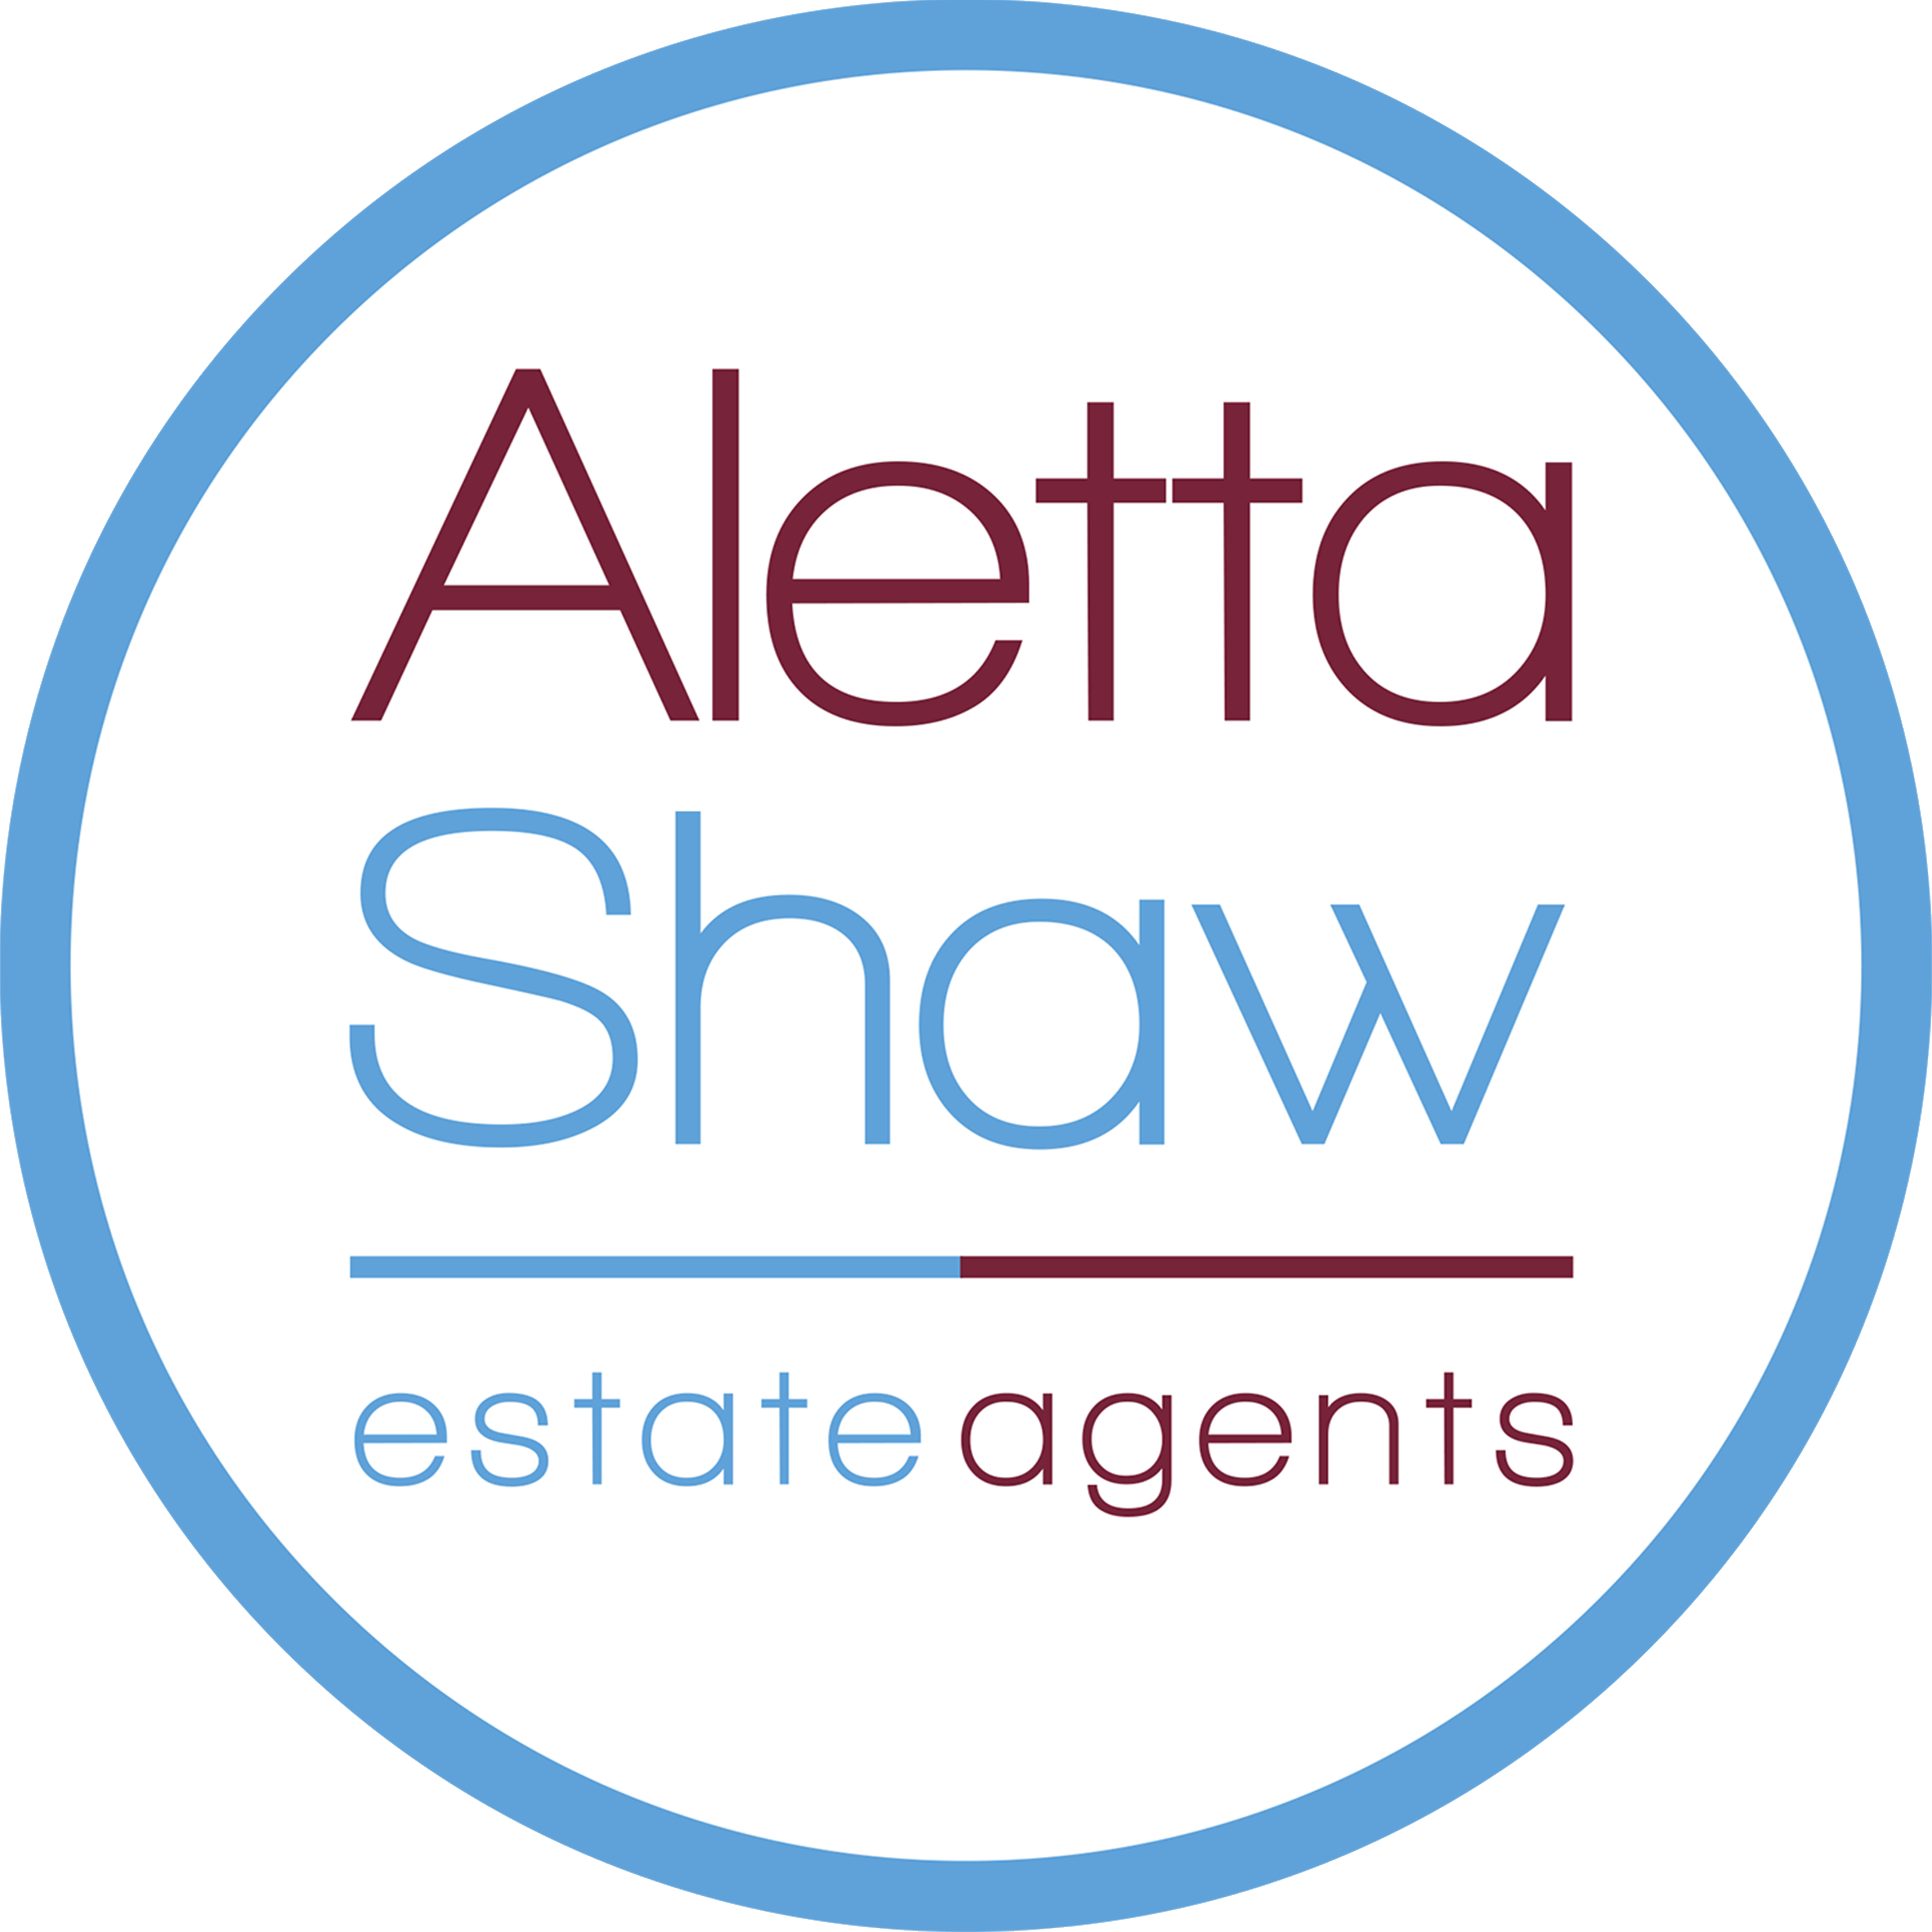 Aletta Shaw Estate Agents